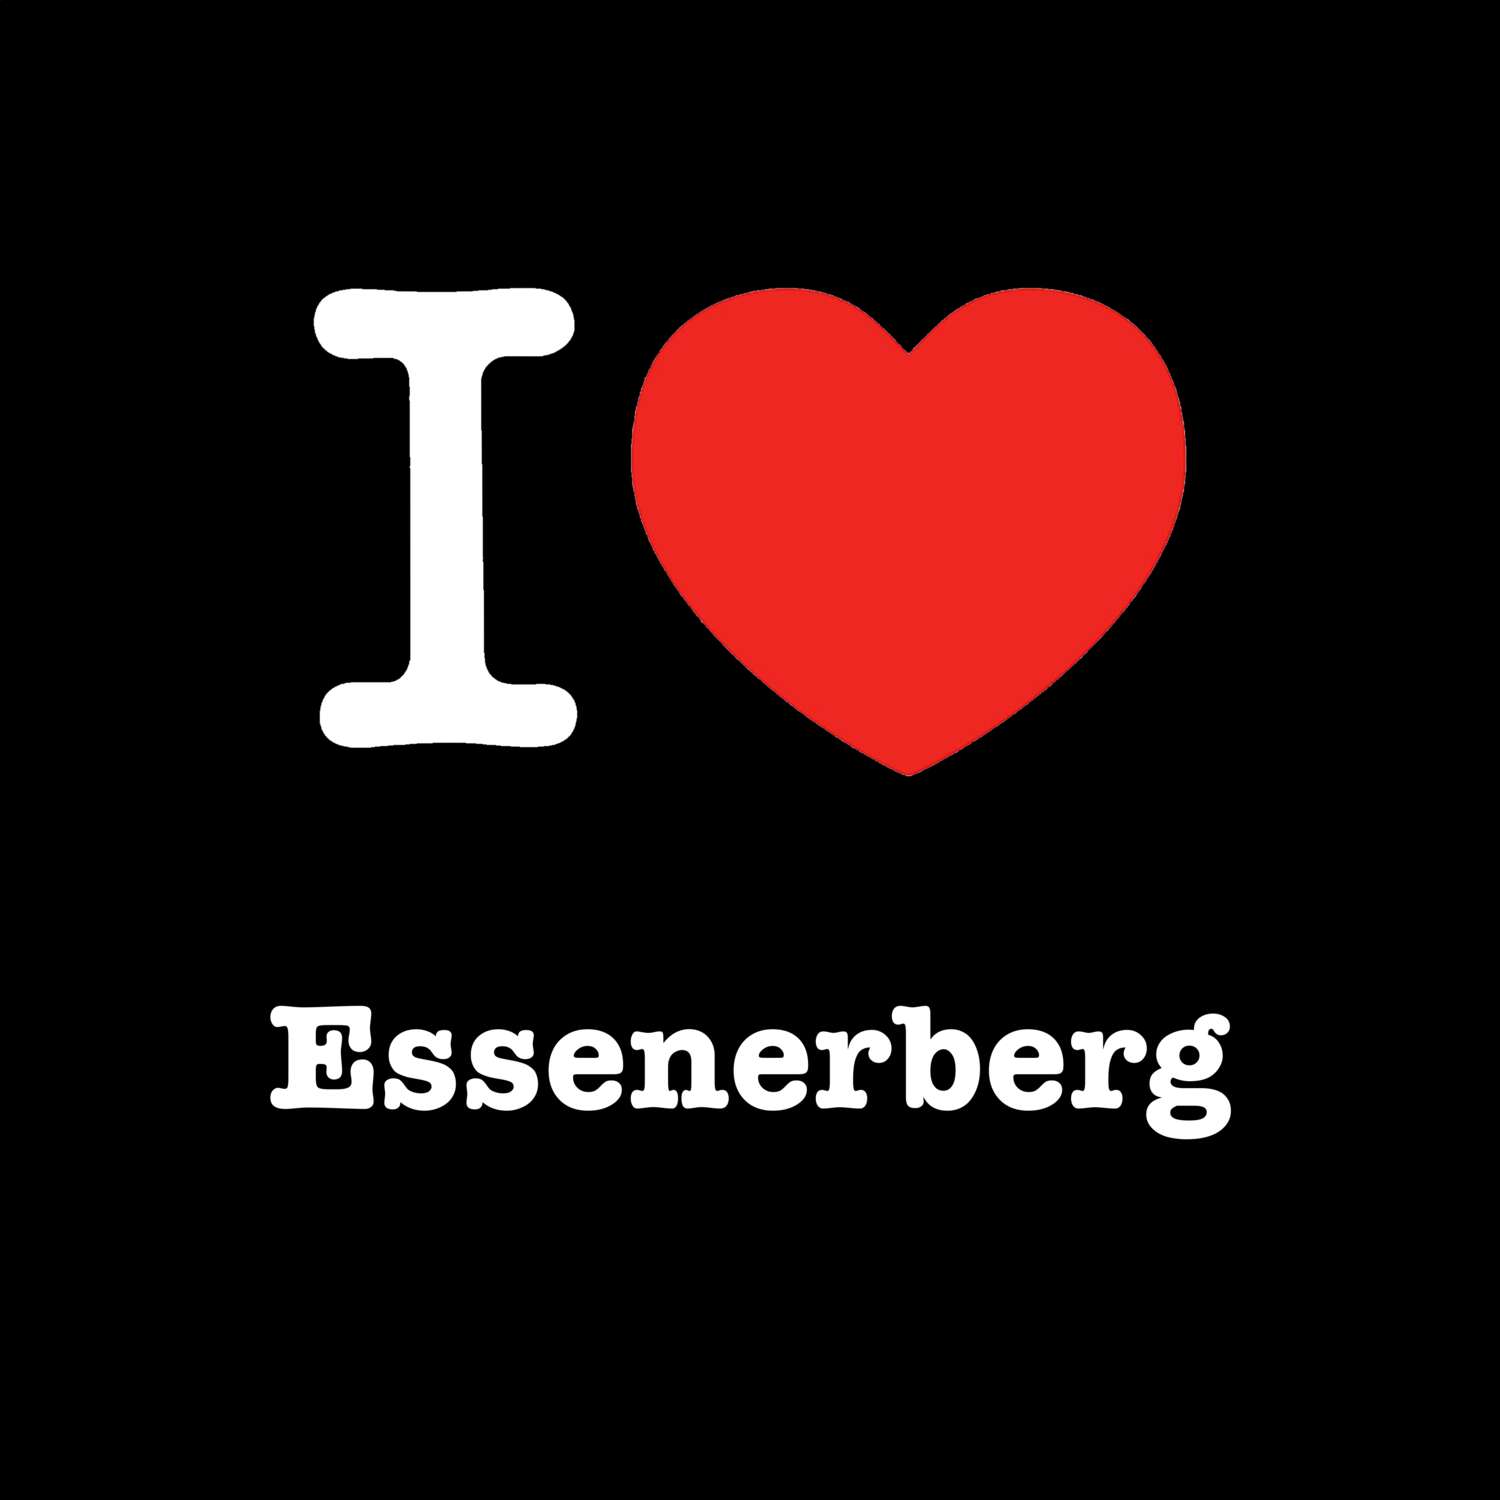 Essenerberg T-Shirt »I love«